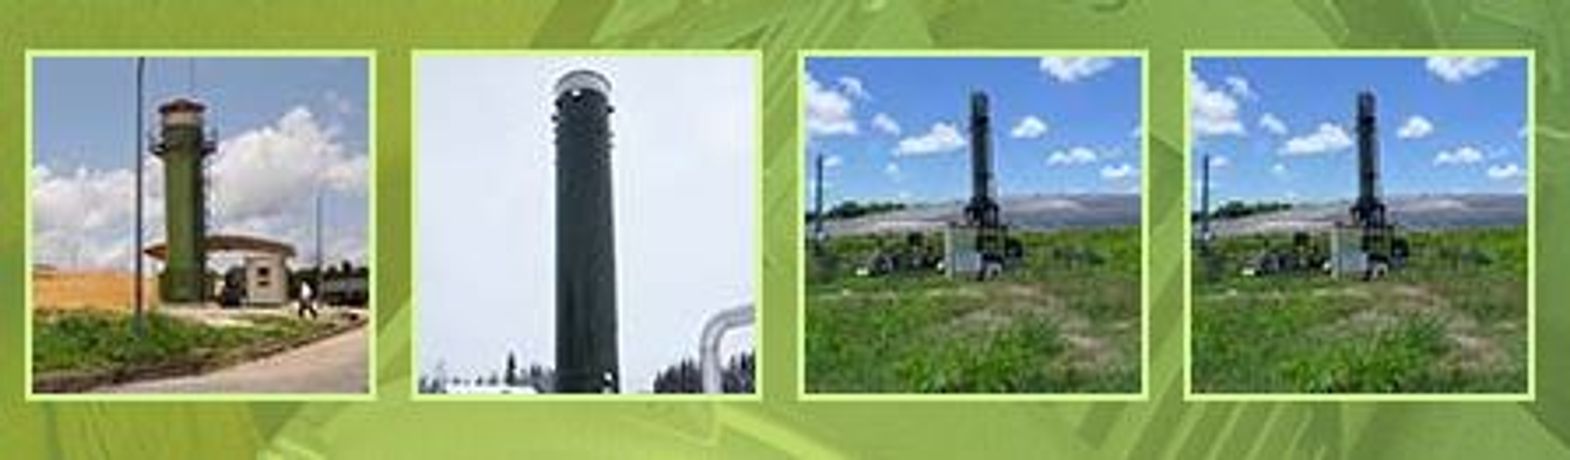 Puti Energy - Biogas and Landfill Flare